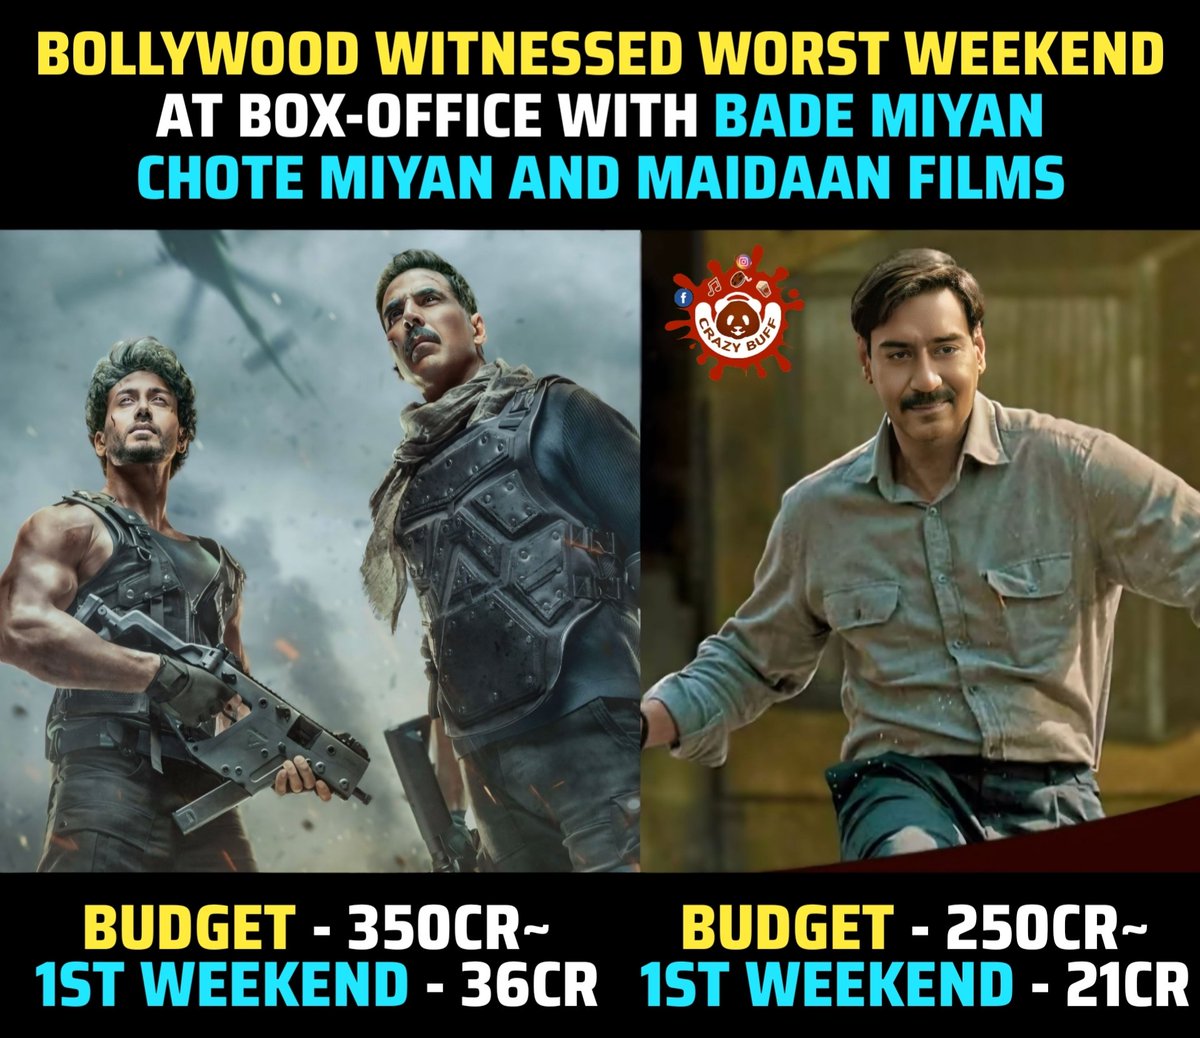 #Bollywood witnessed the worst weekend at the #BoxOffice with #BadeMiyanChoteMiyan and #Maidaan. #AkshayKumar #TigerShroff #AjayDevgn